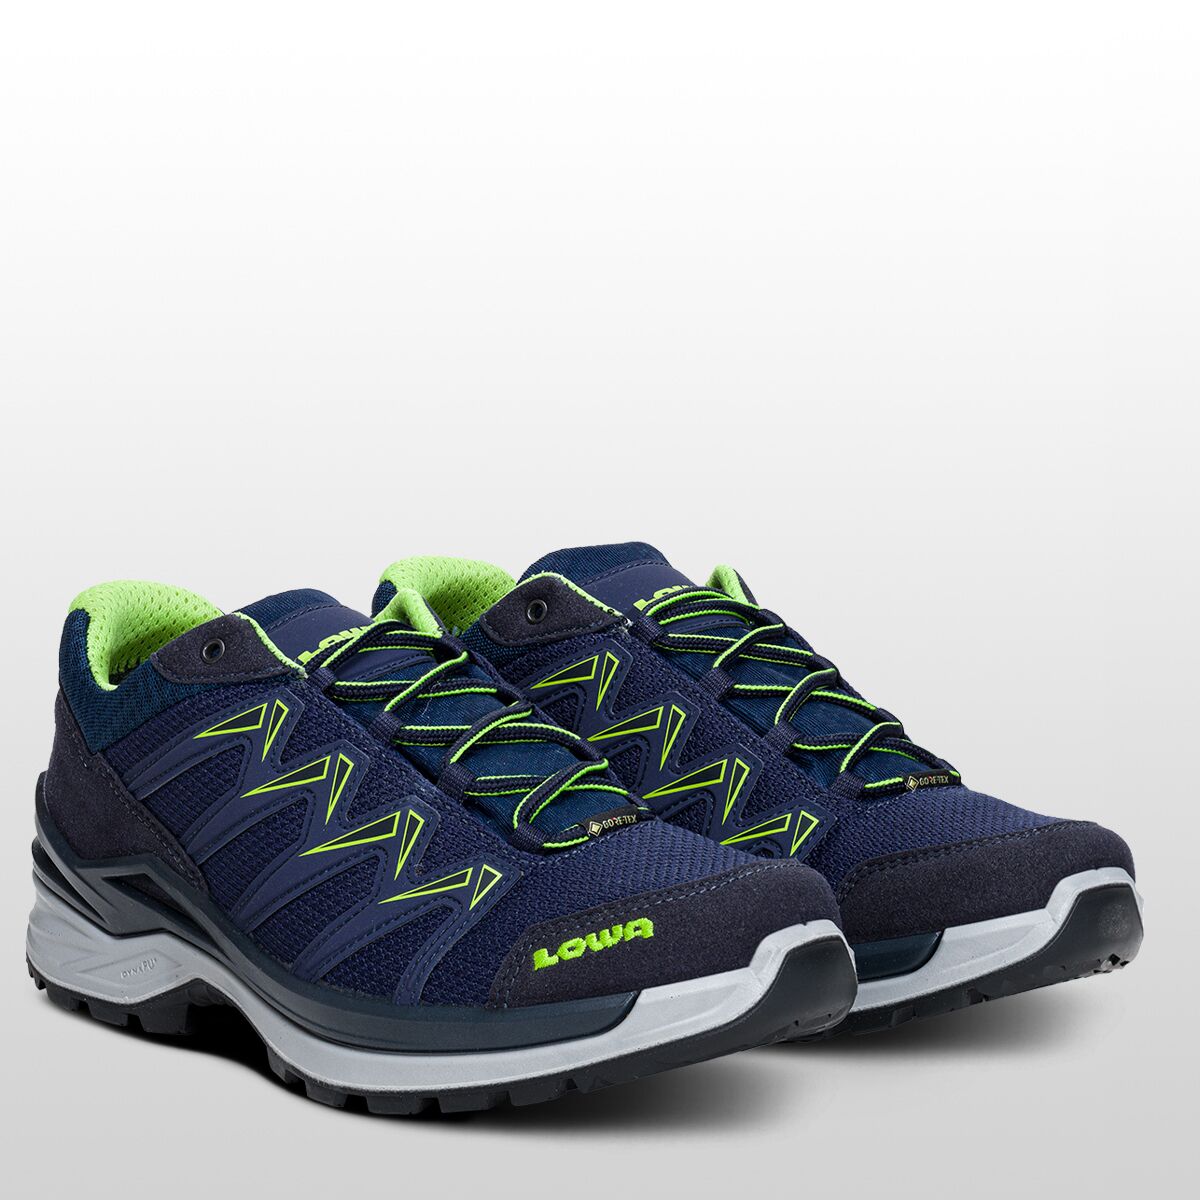 Vooruit begroting verontreiniging Lowa Innox Pro GTX Lo Hiking Shoe - Men's - Footwear